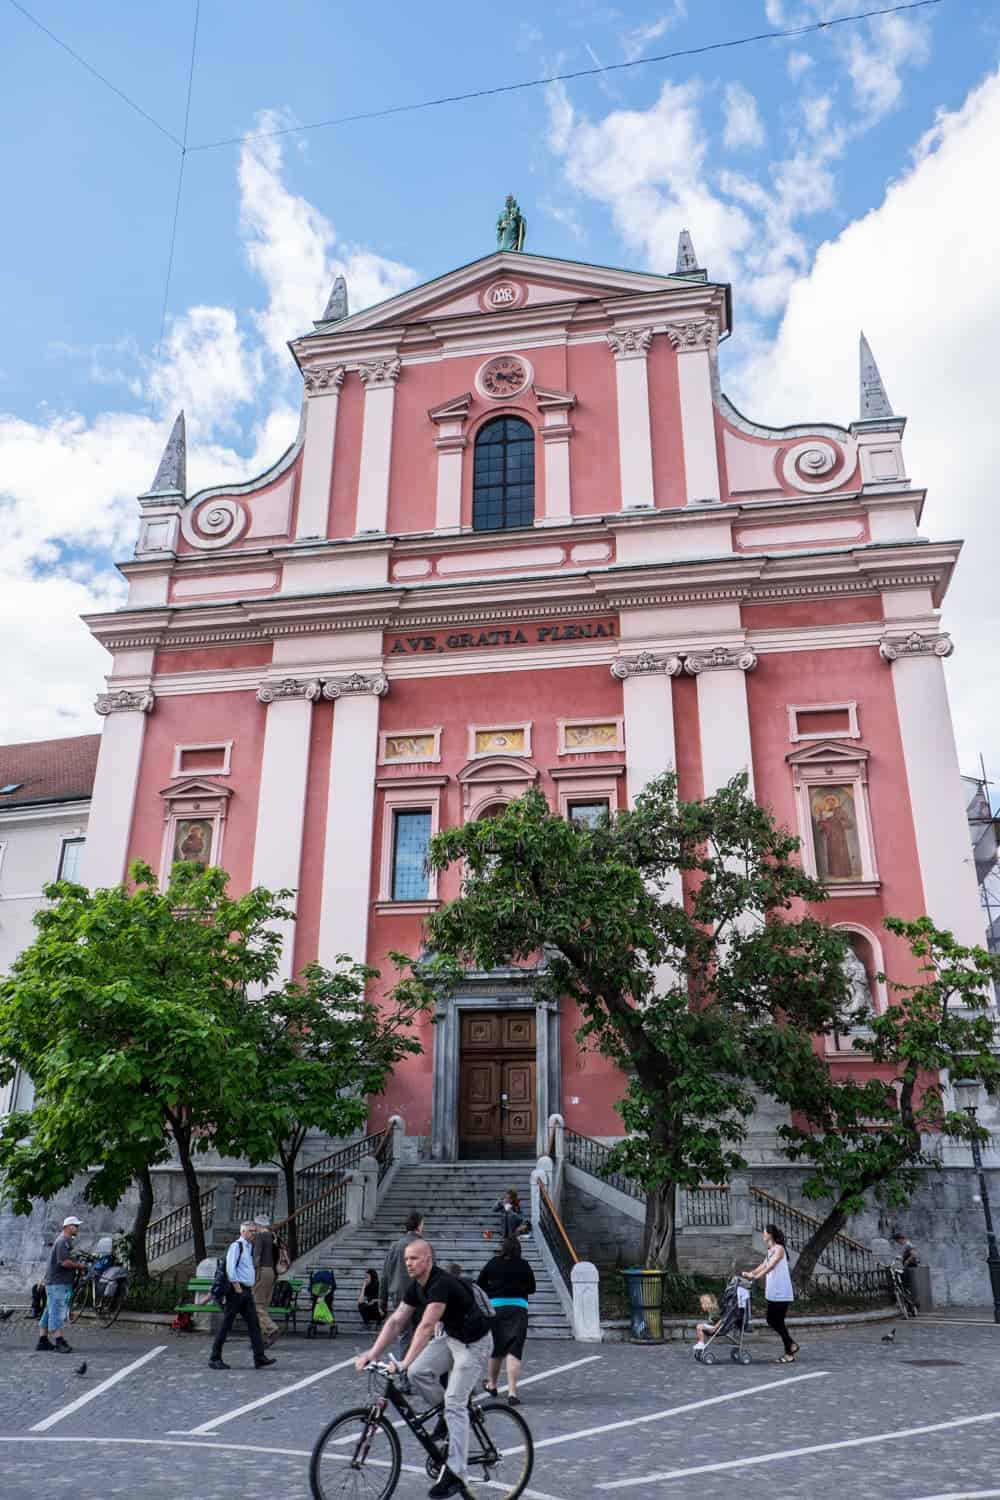 The Franciscan Church of the Annunciation on Prešeren Square in Ljubljana, Slovenia